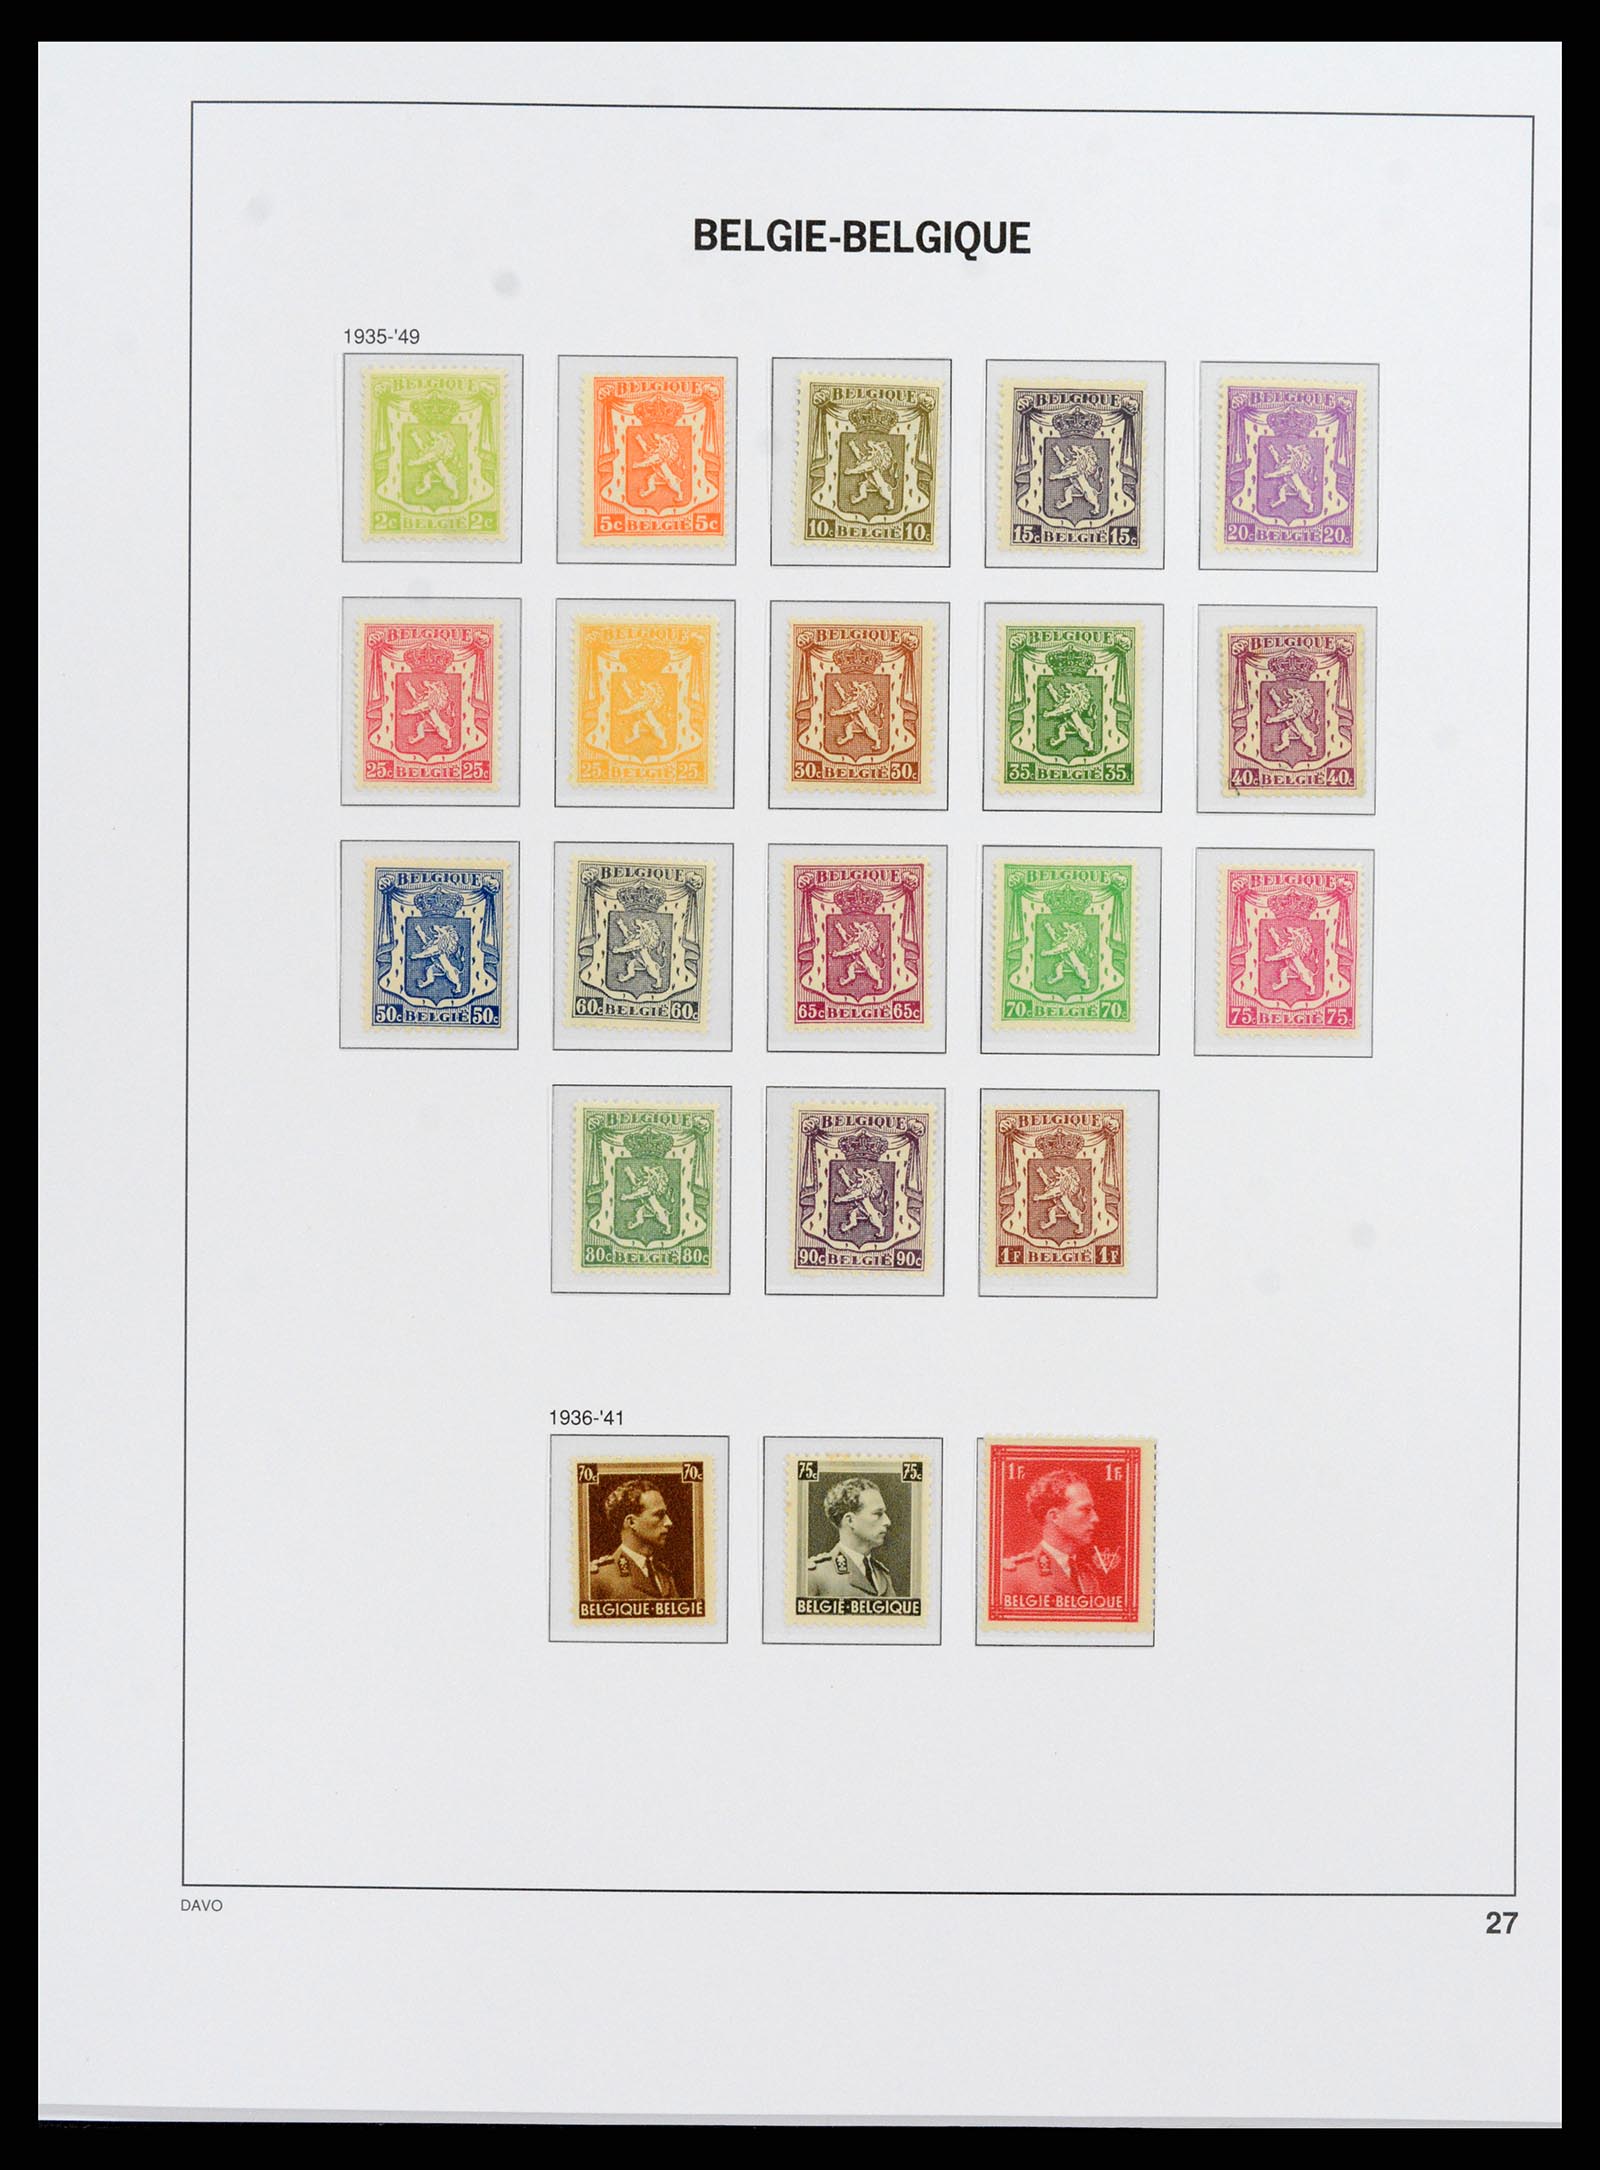 38073 022 - Stamp collection 38073 Belgium 1849-1950.